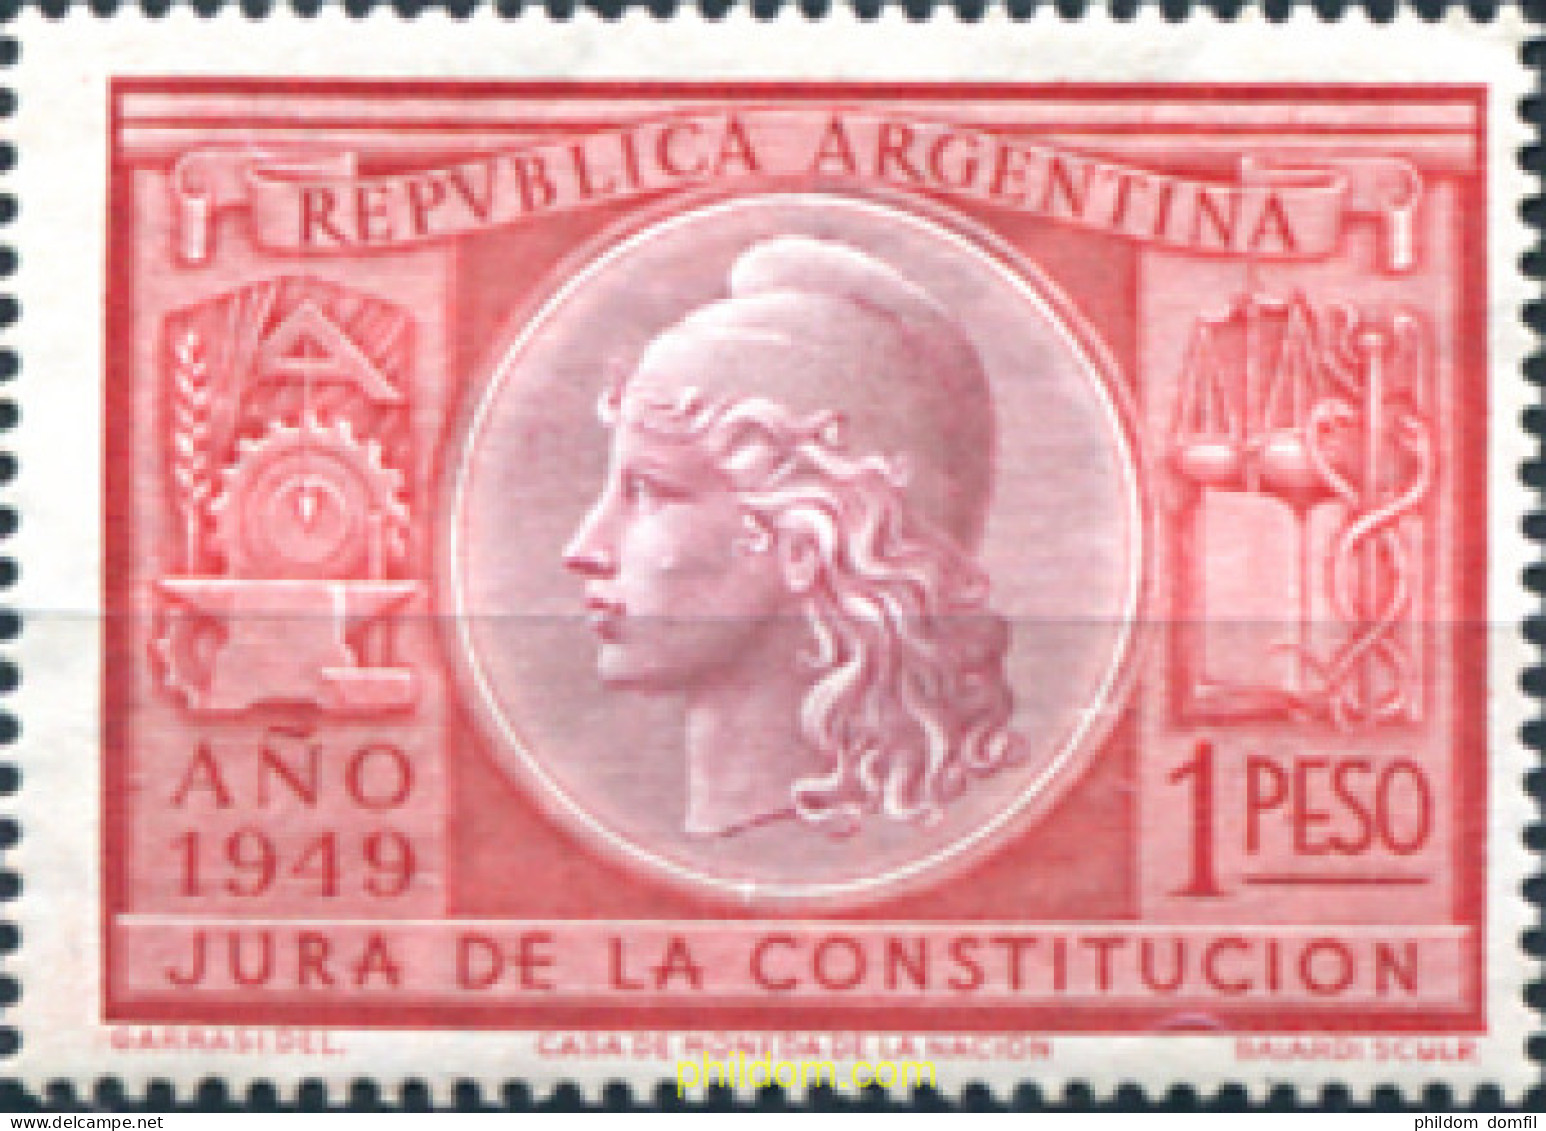 725675 MNH ARGENTINA 1949 JURA DE LA COSTITUCION - Unused Stamps